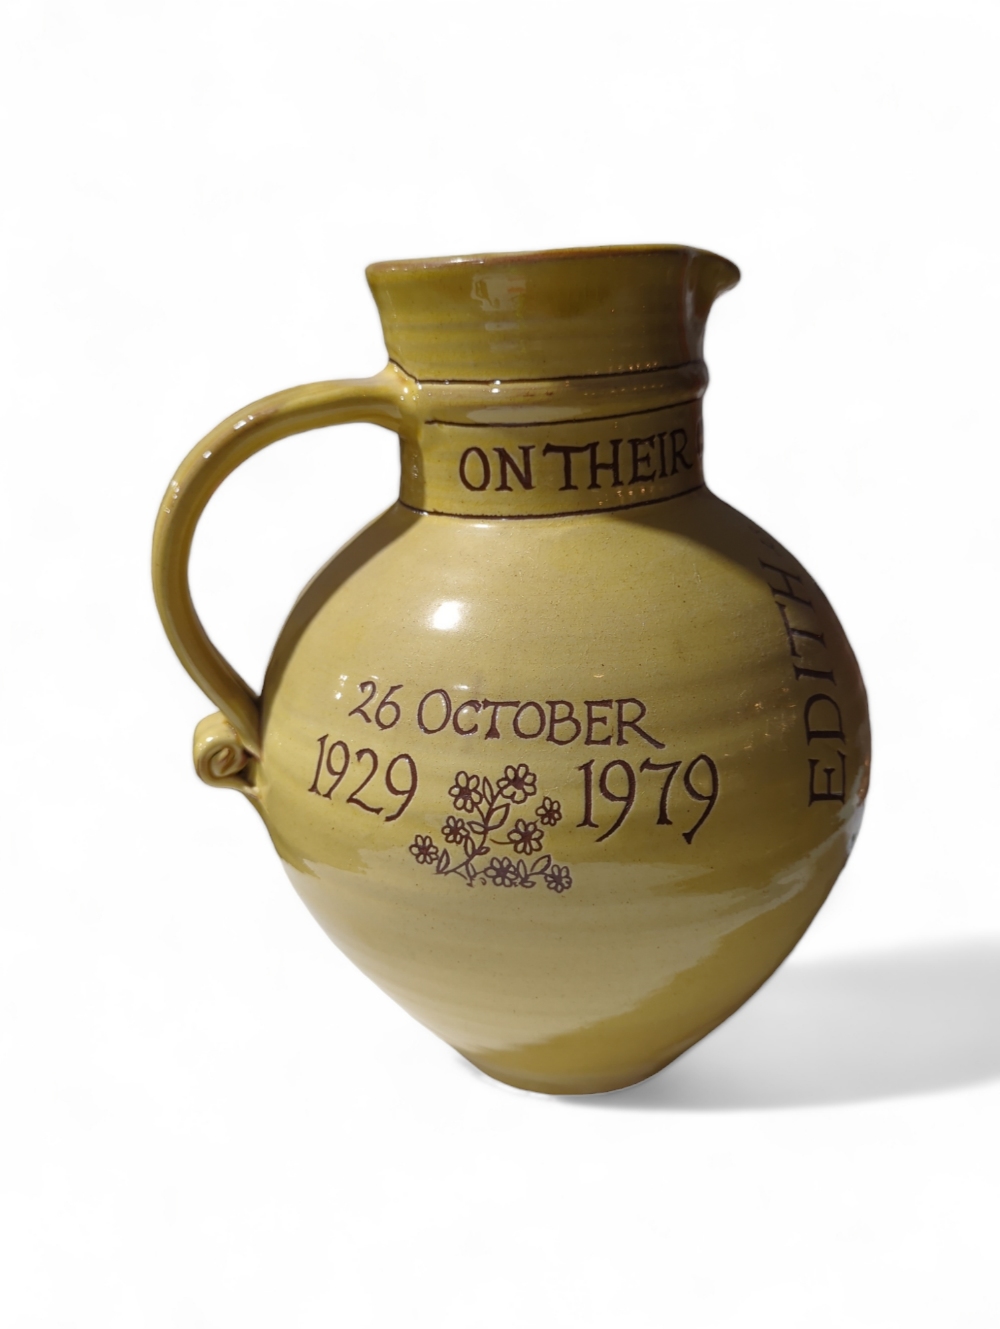 A Golden Wedding celebration jug, terracotta with - Image 4 of 4